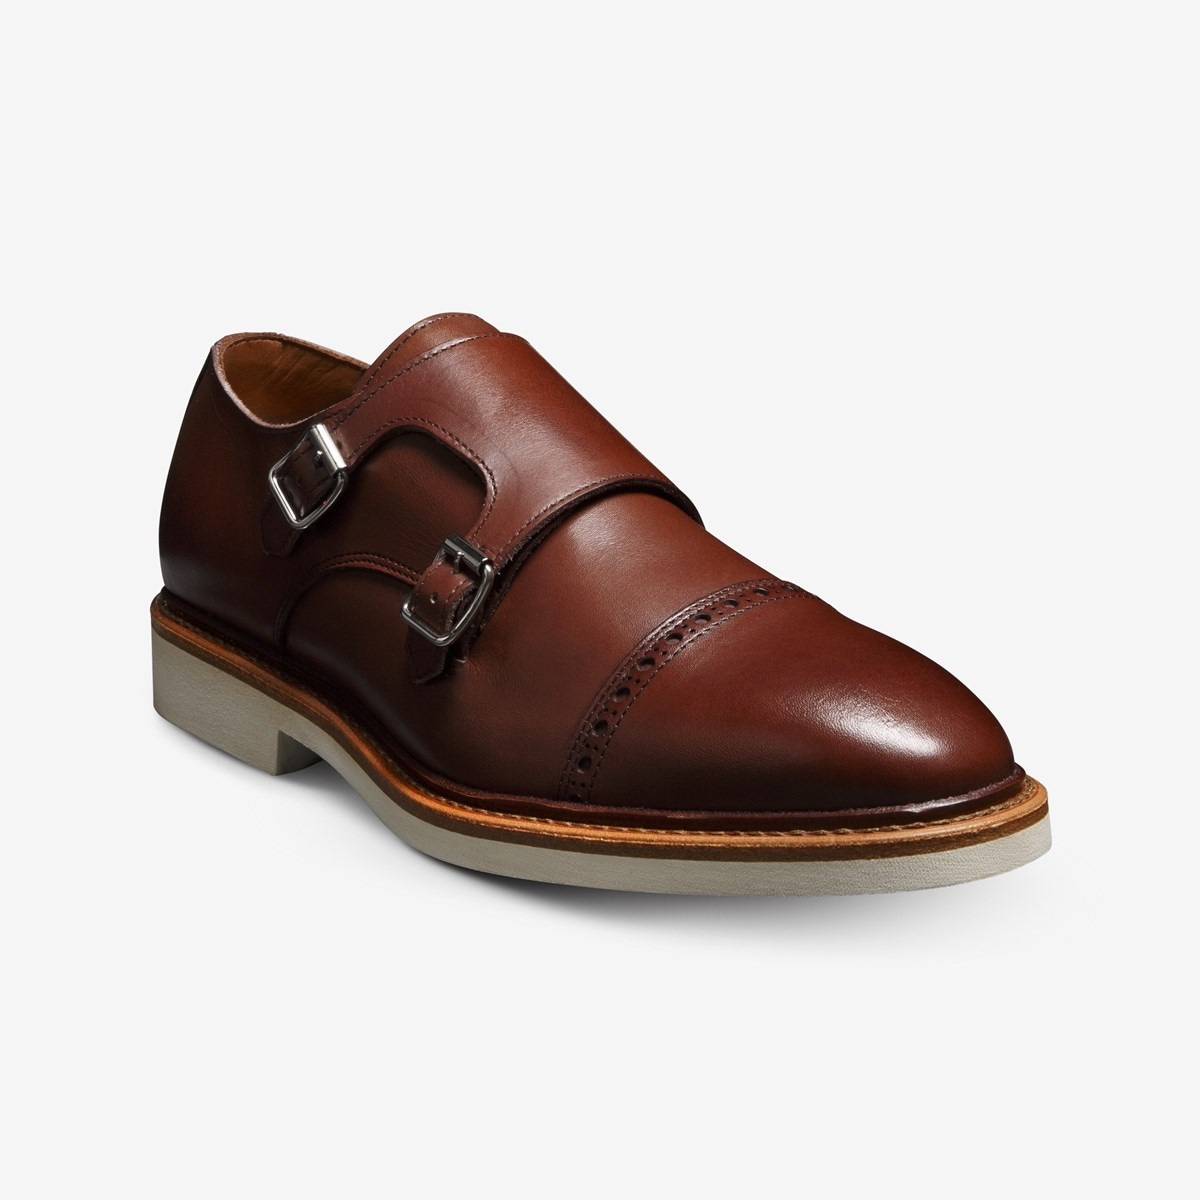 Men's Brown Monk-Strap Shoes